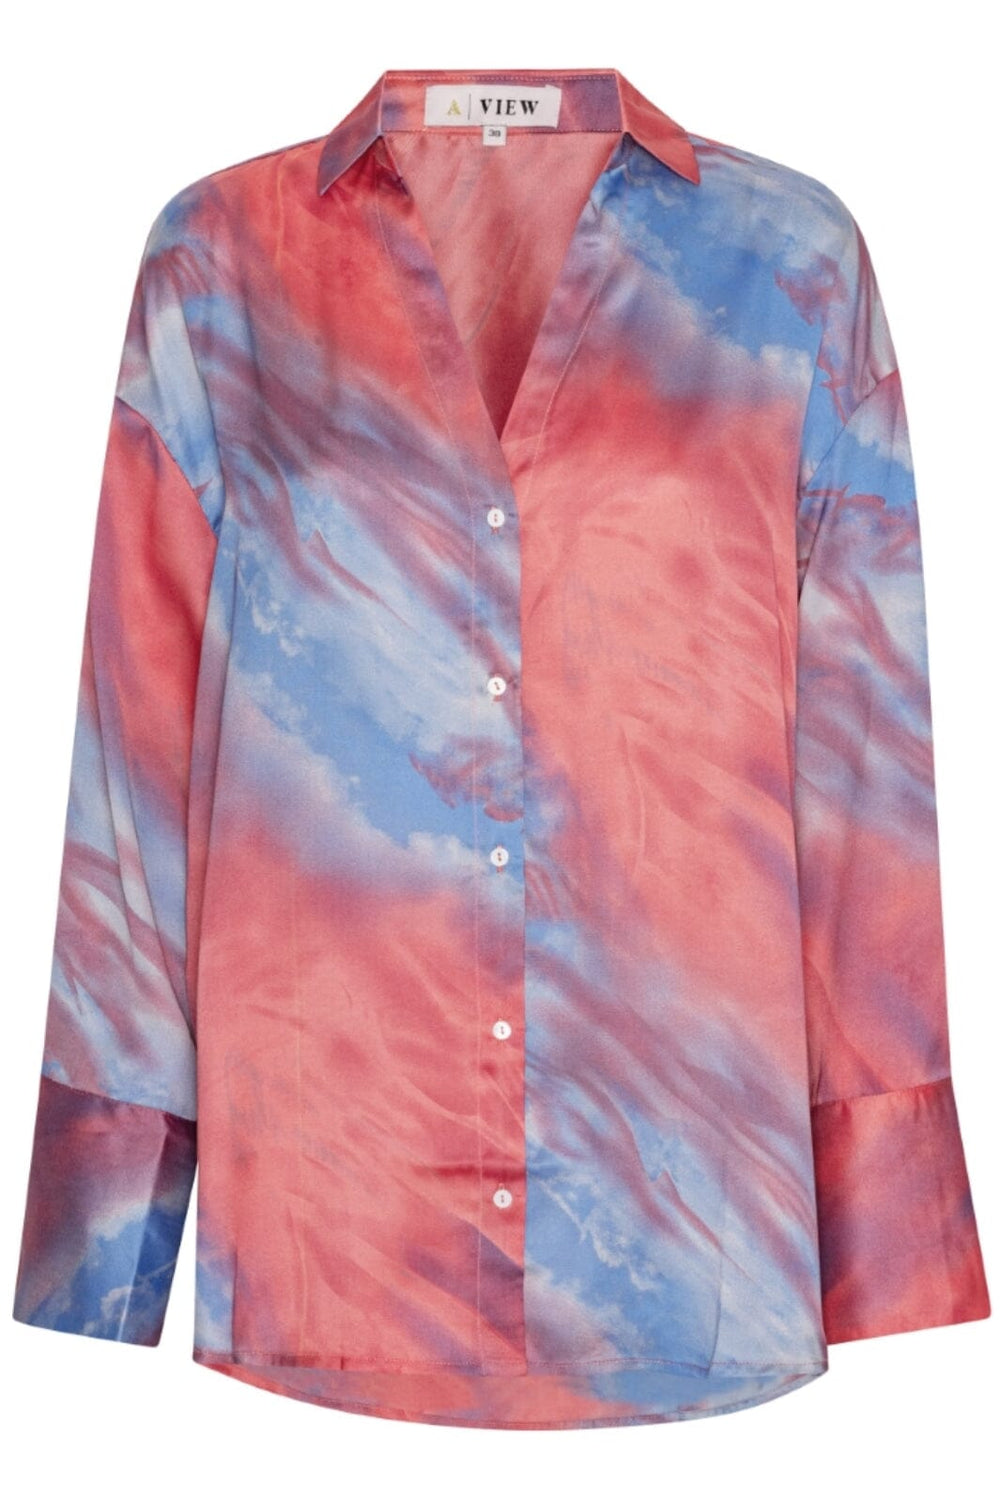 A-View - Carina Shirt - 256 Coral/Blue Skjorter 